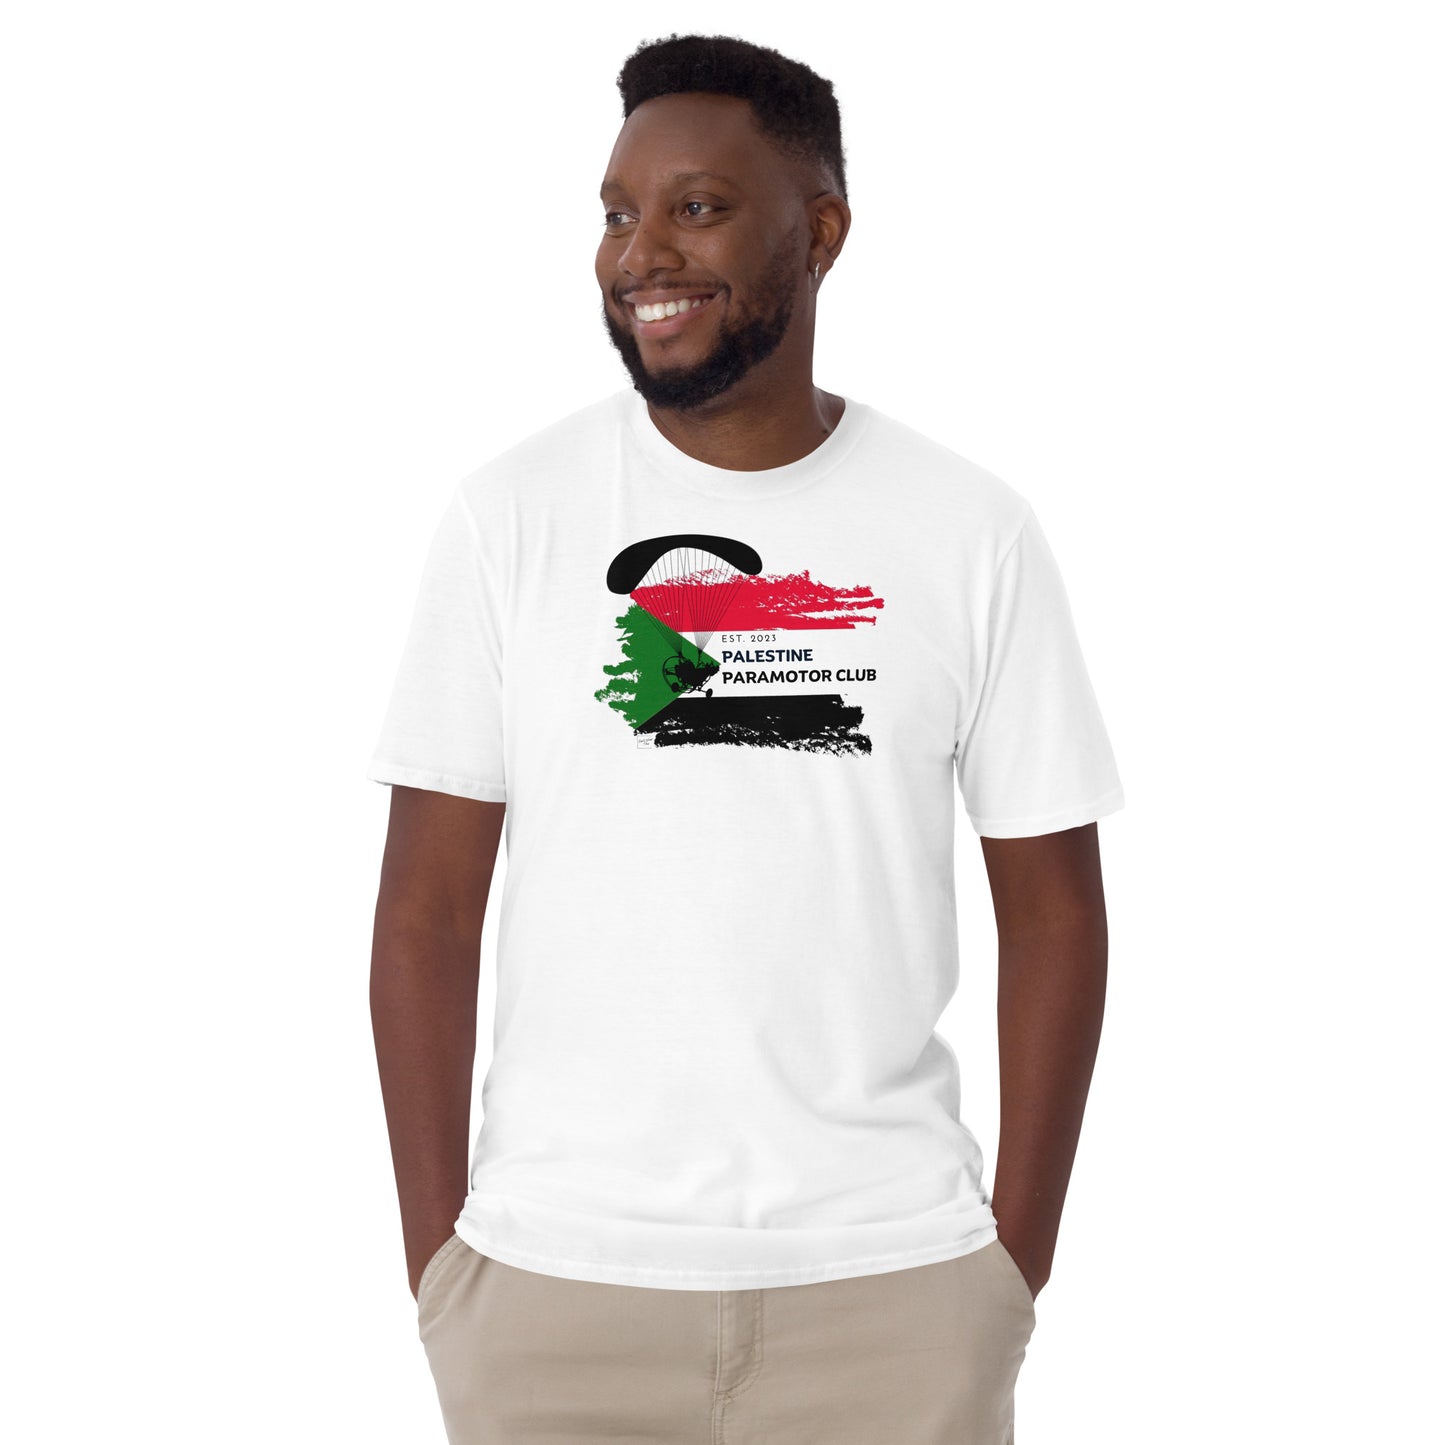 Palestine Paramotor Club T-Shirt